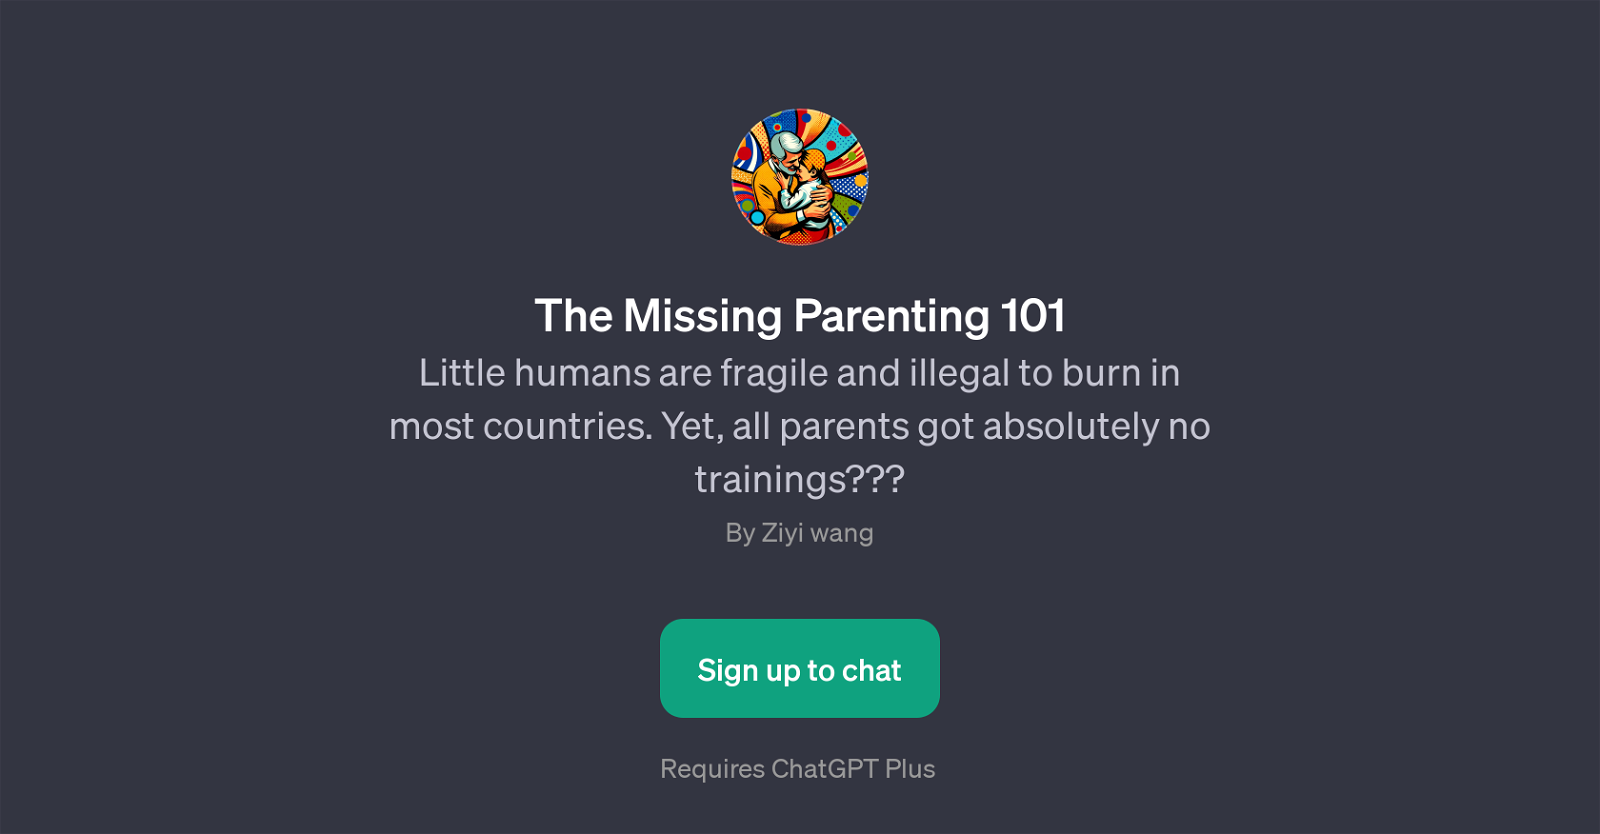 The Missing Parenting 101 website